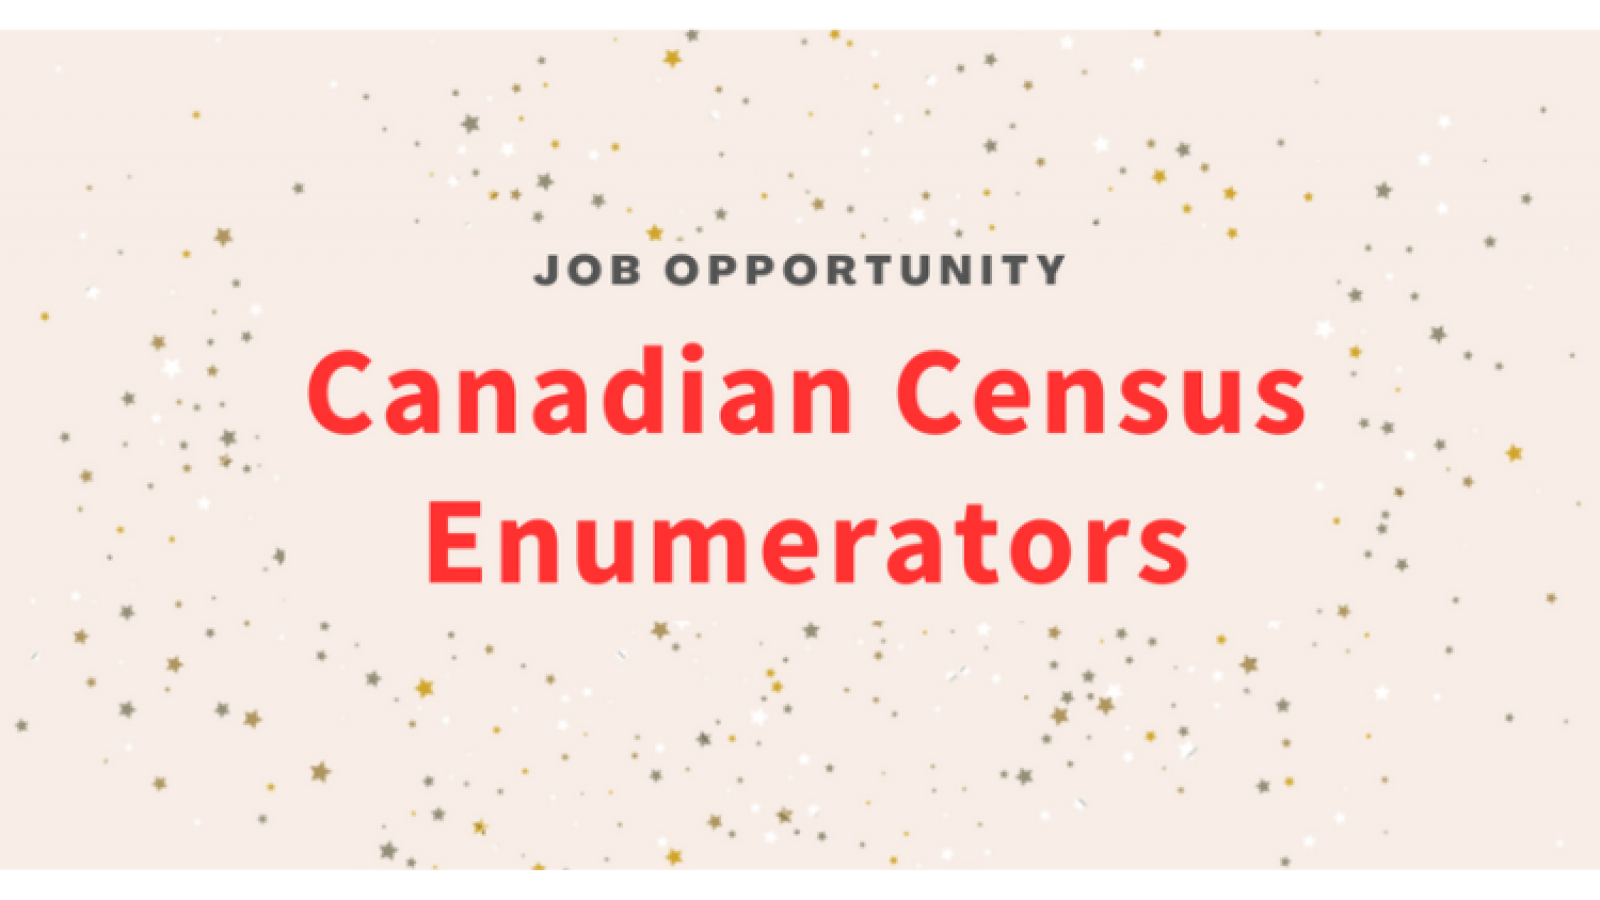 Job opportunity Canadian Census Enumerator